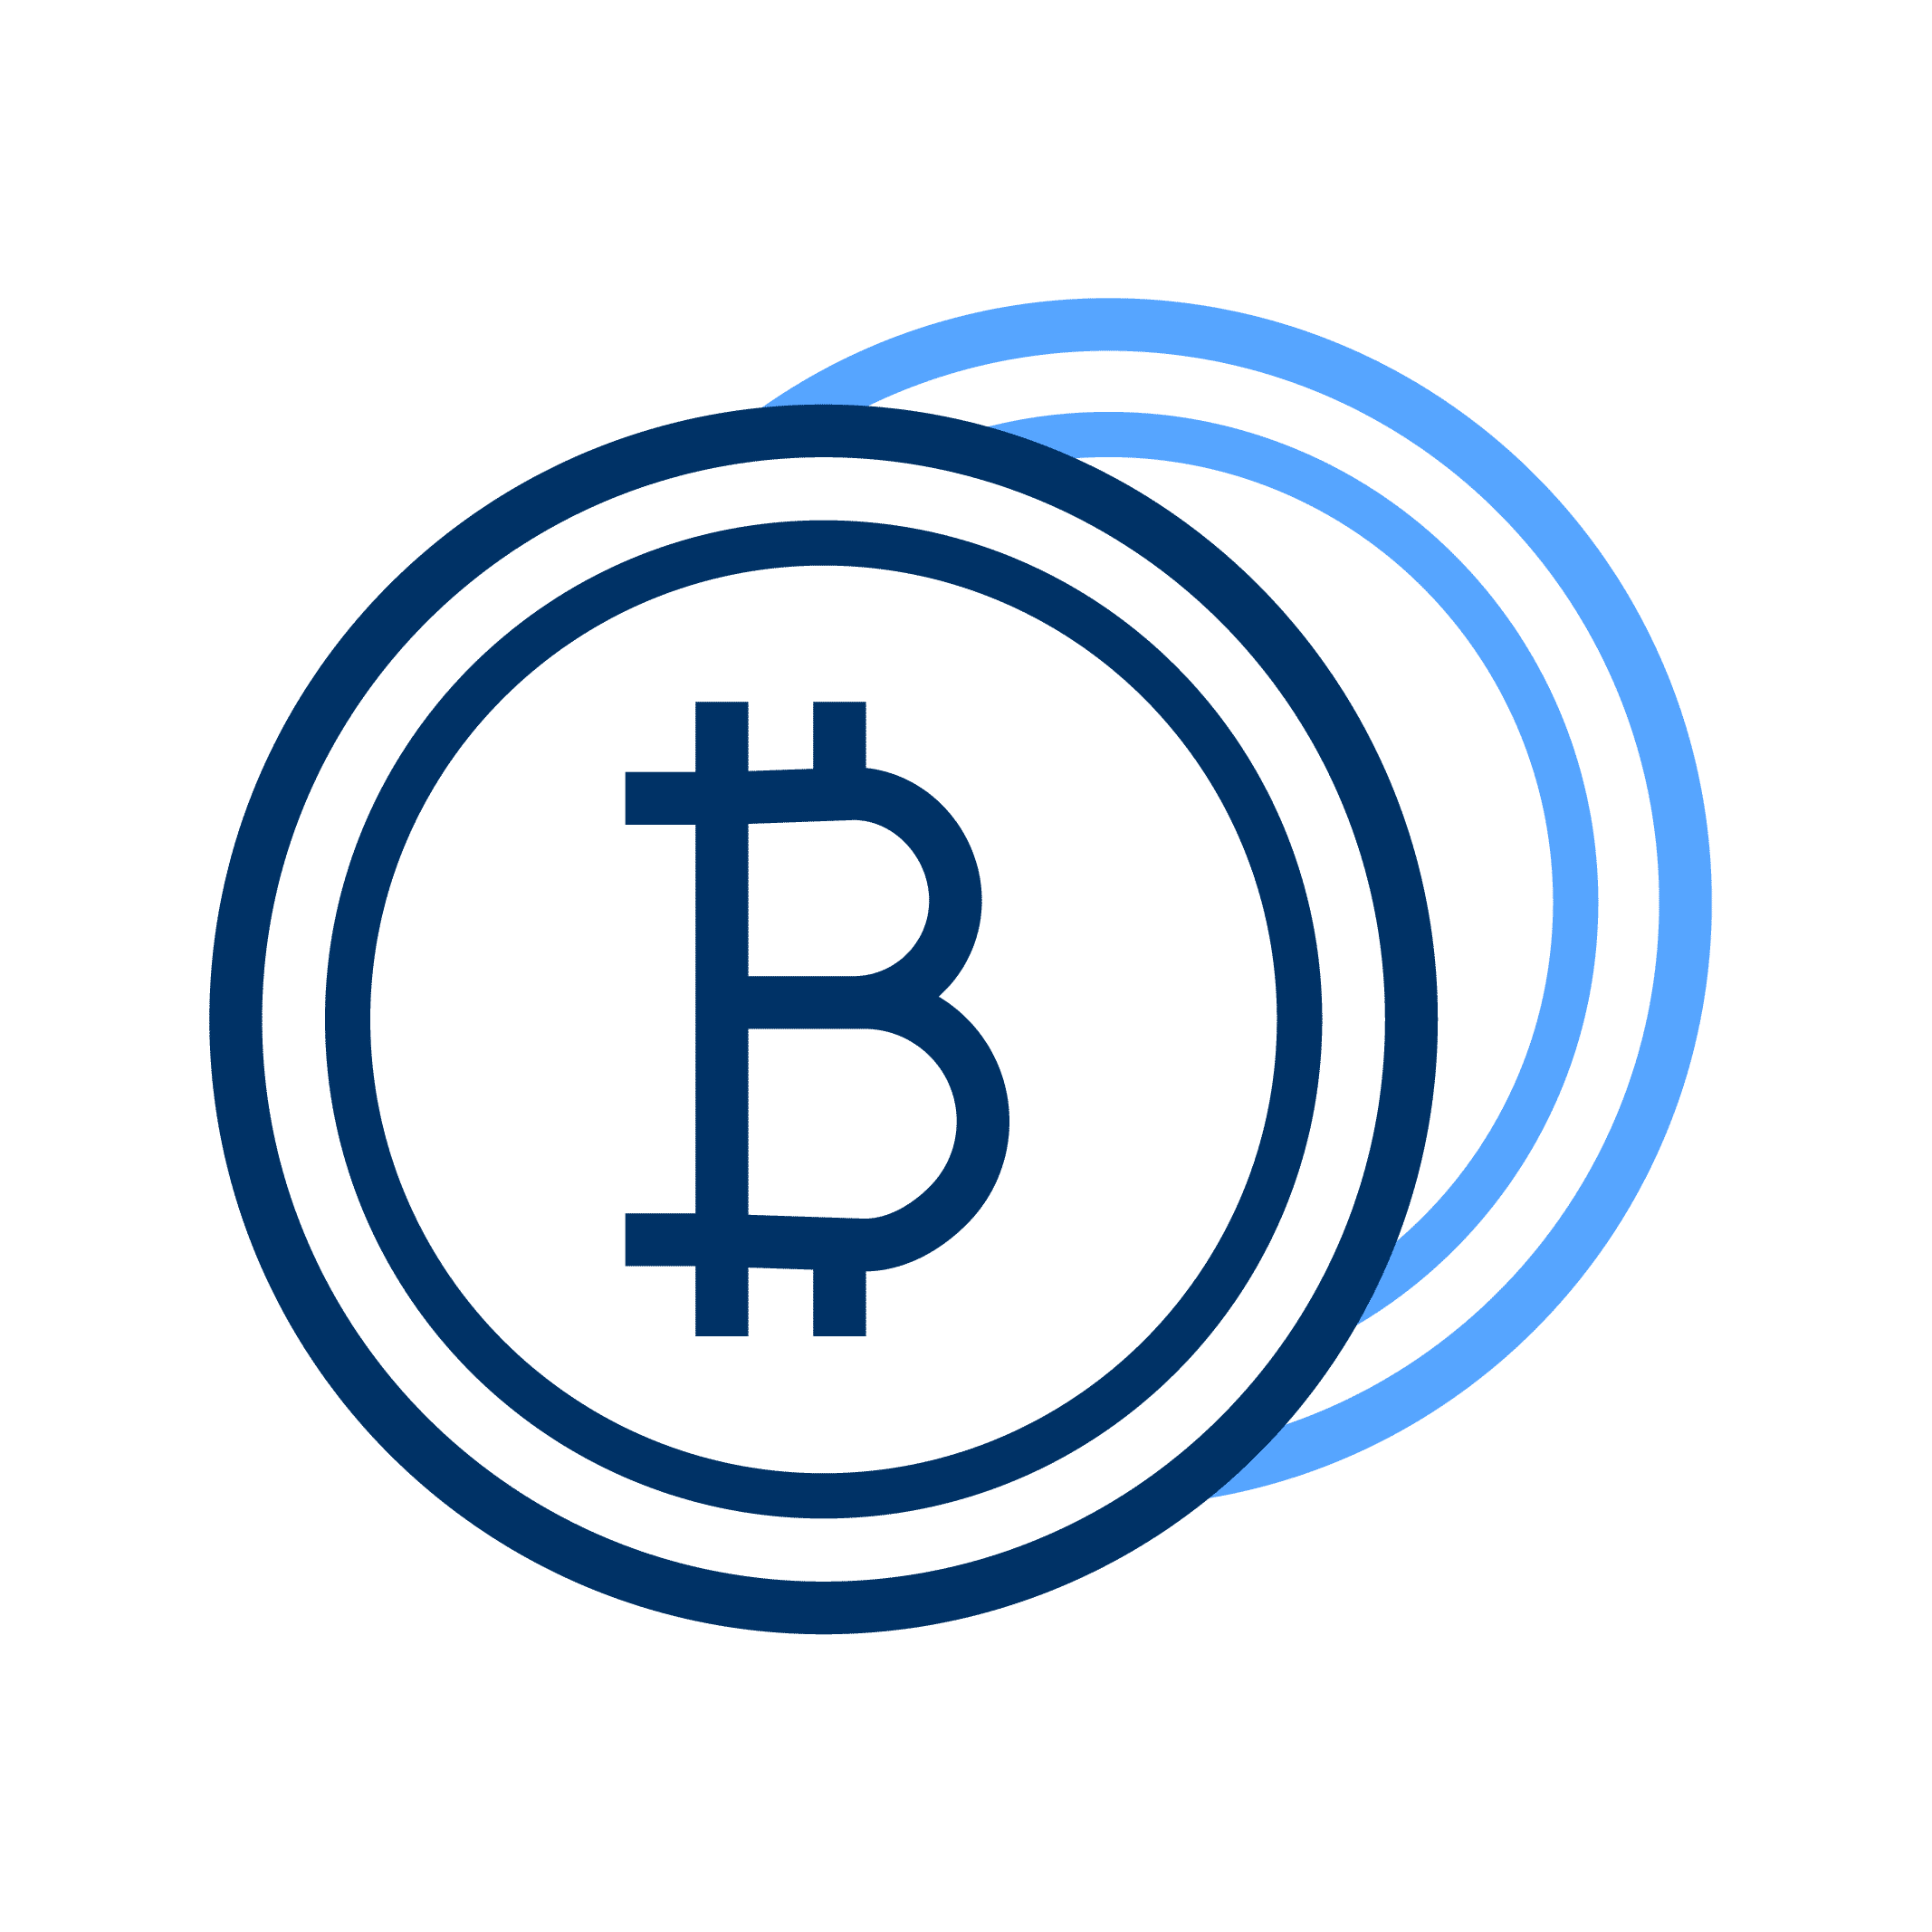 Crypto coins and tokens icon with blue Bitcoin logo